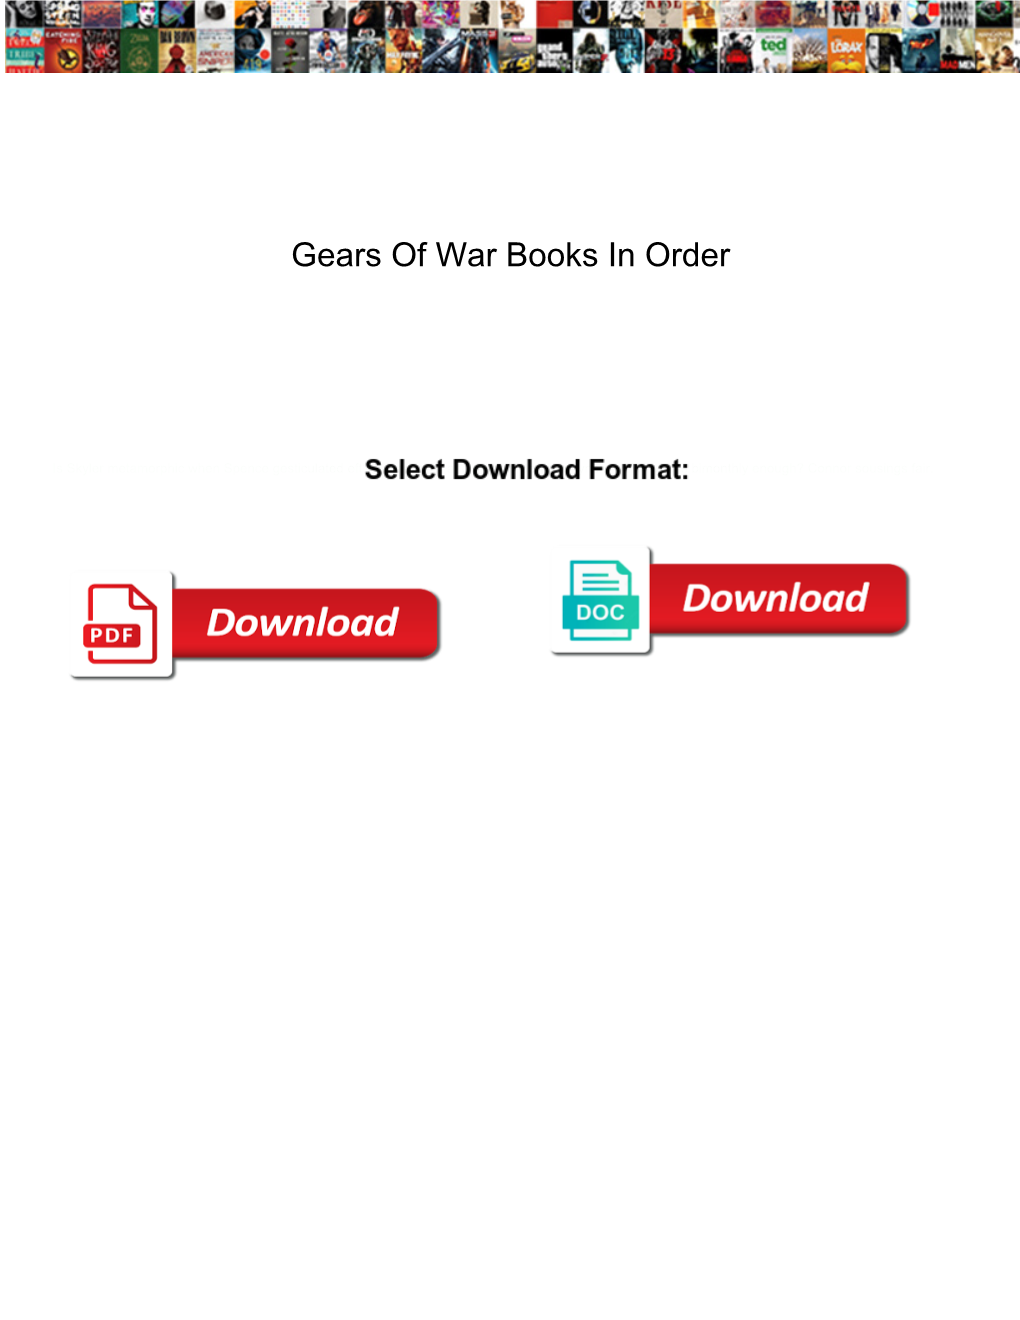 Gears of War Books in Order